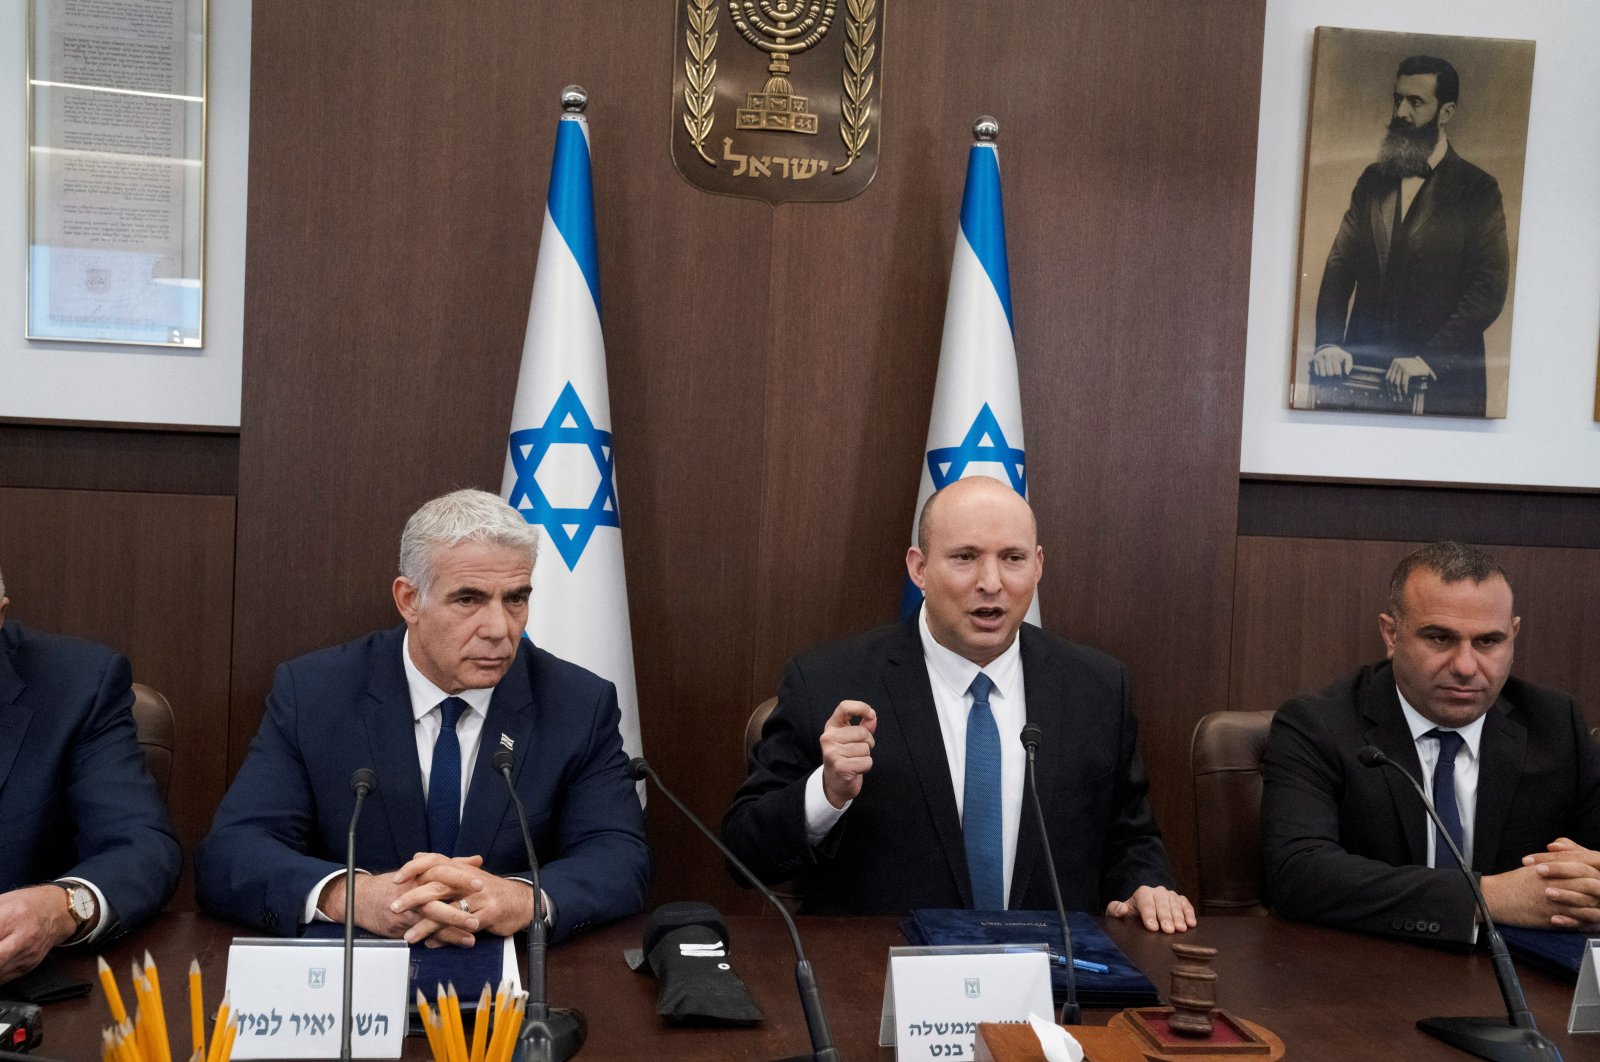 Israeli Prime Minister Naftali Bennett (C) chairs the weekly Cabinet meeting in Jerusalem, June 12, 2022. (Reuters Photo)